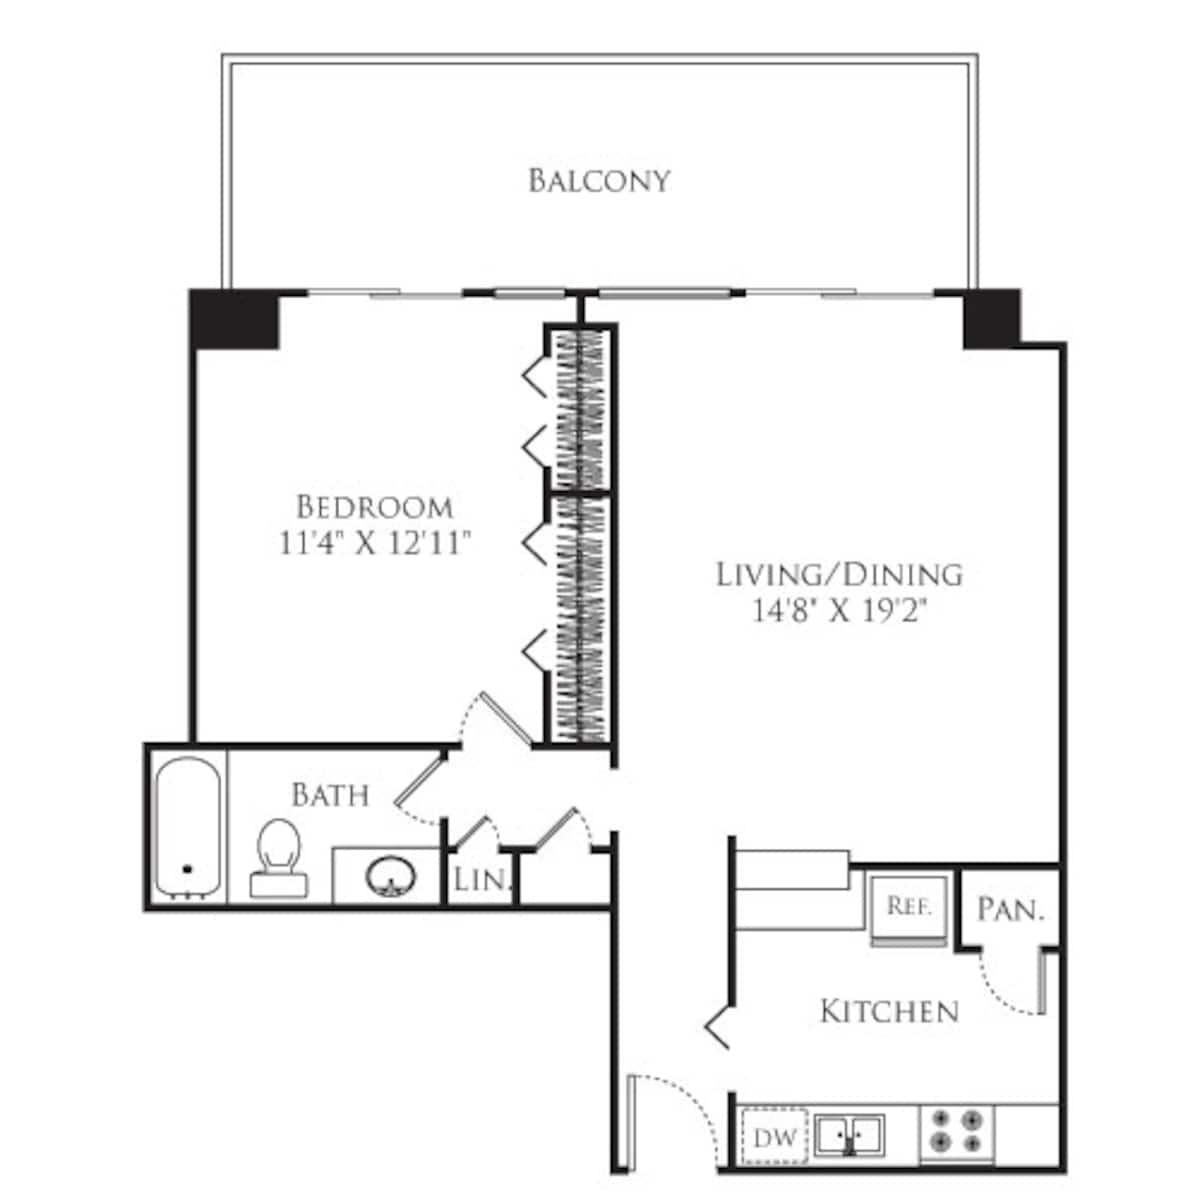 Floorplan diagram for 1 Bedroom Tower, showing 1 bedroom